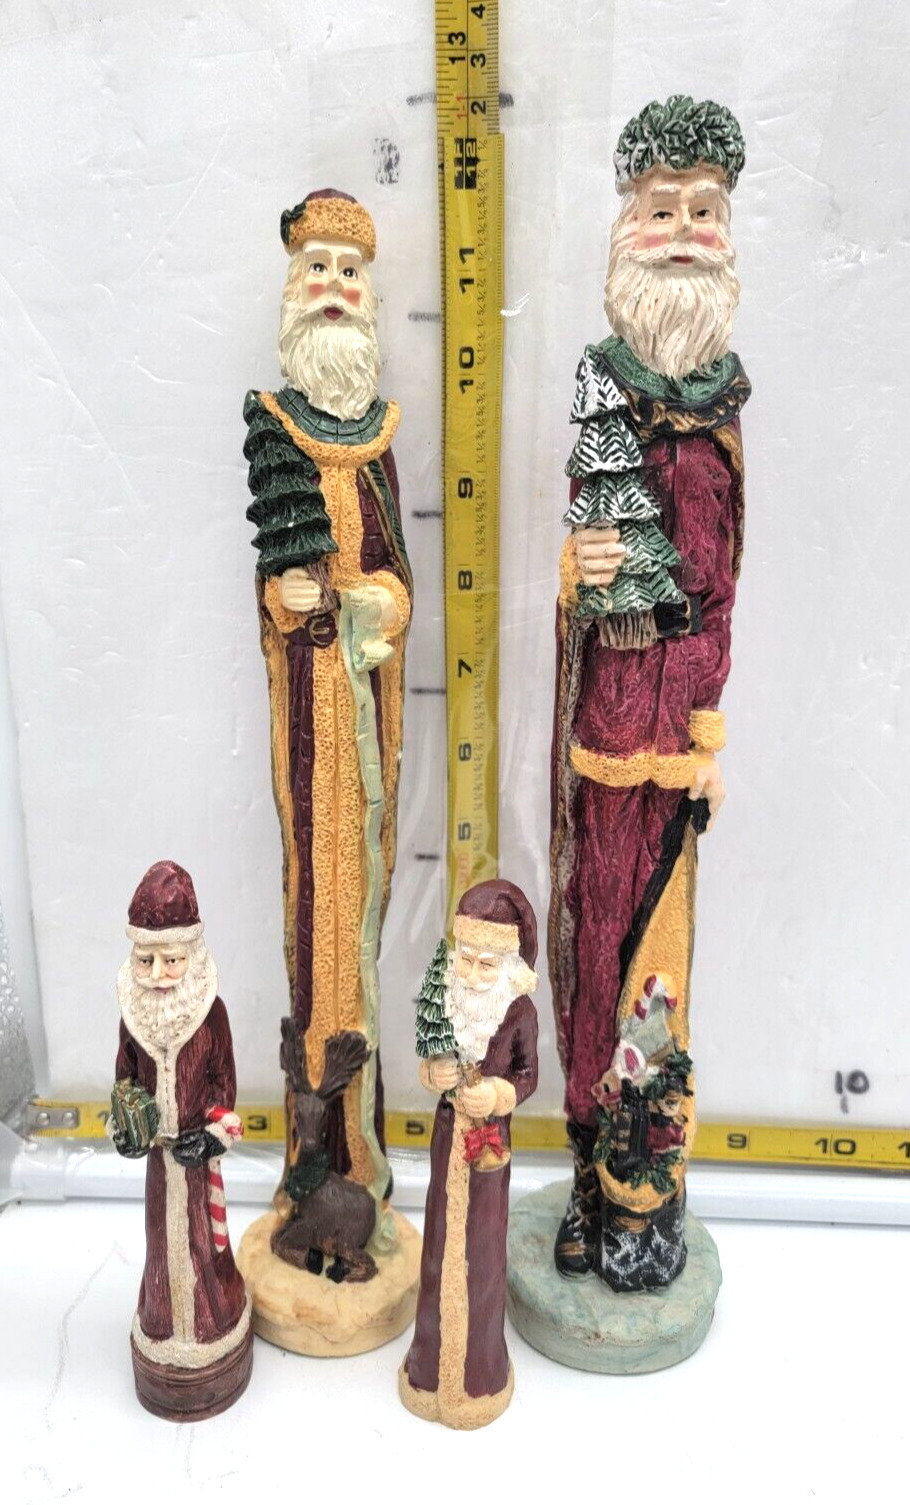 4 Windsor Collection Pencil Santa With Tree, List and Deer Christmas Figurine